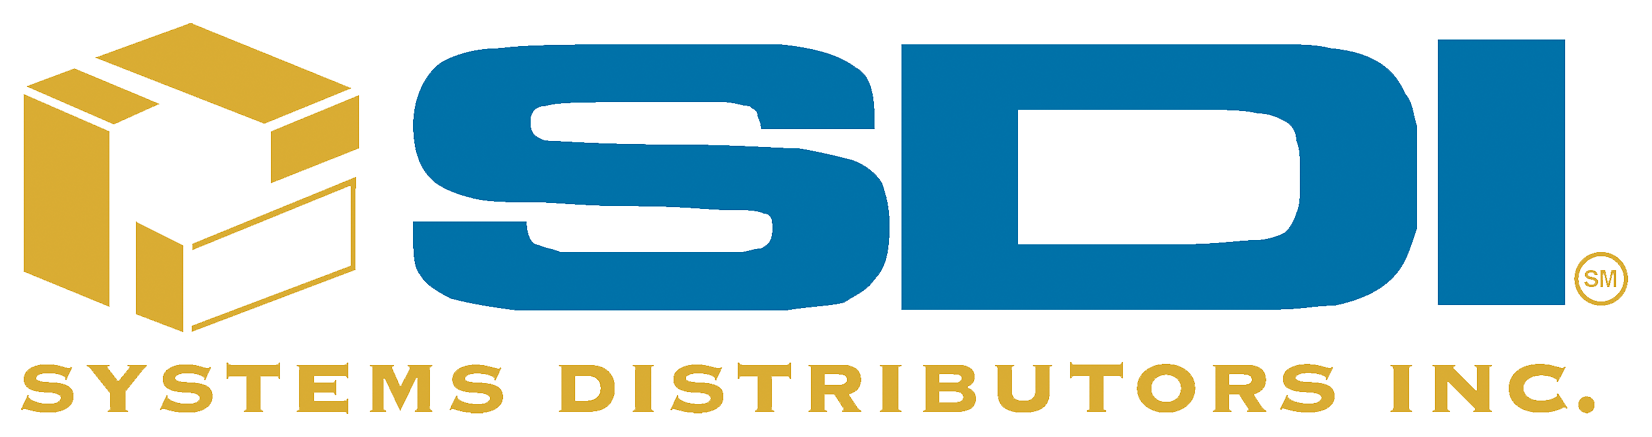 Systems Distributors Inc.